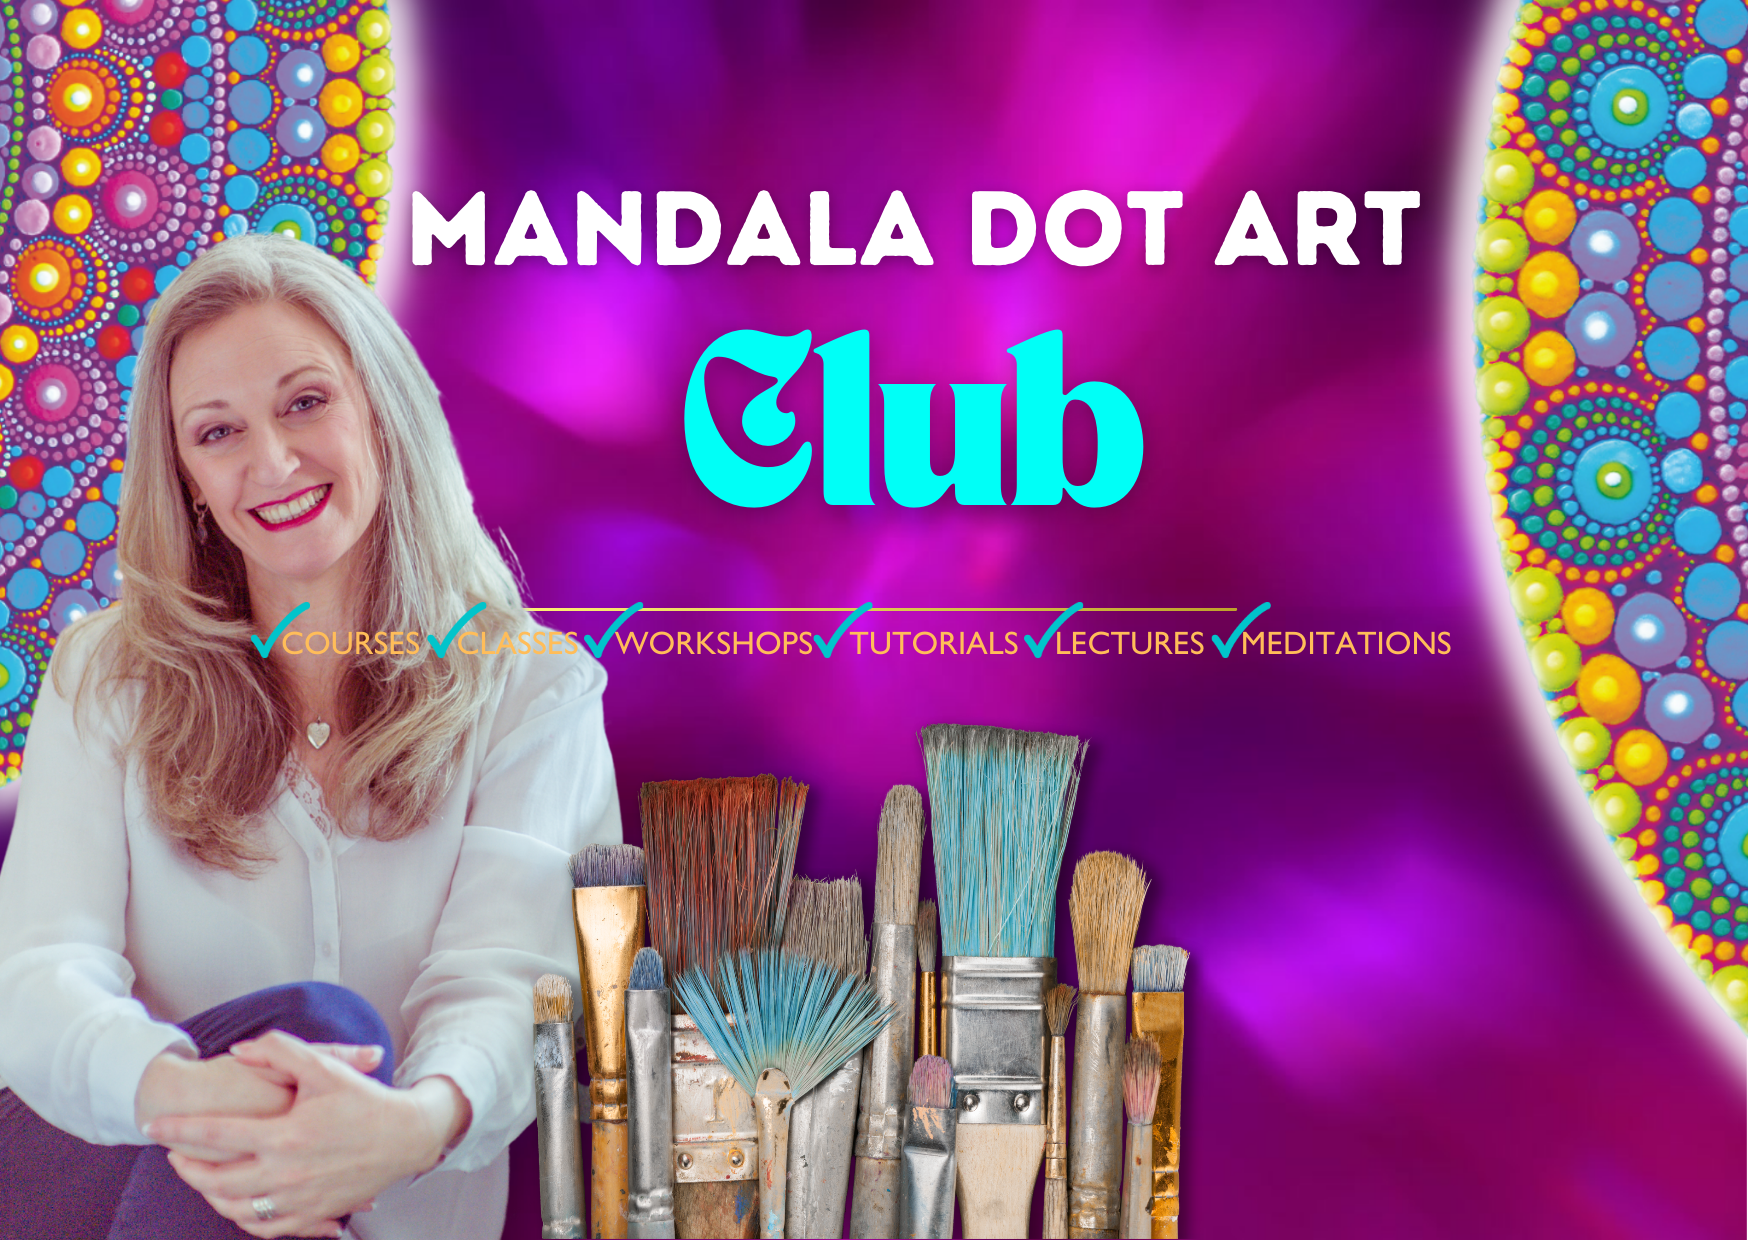 The Mandala Dot Art Club